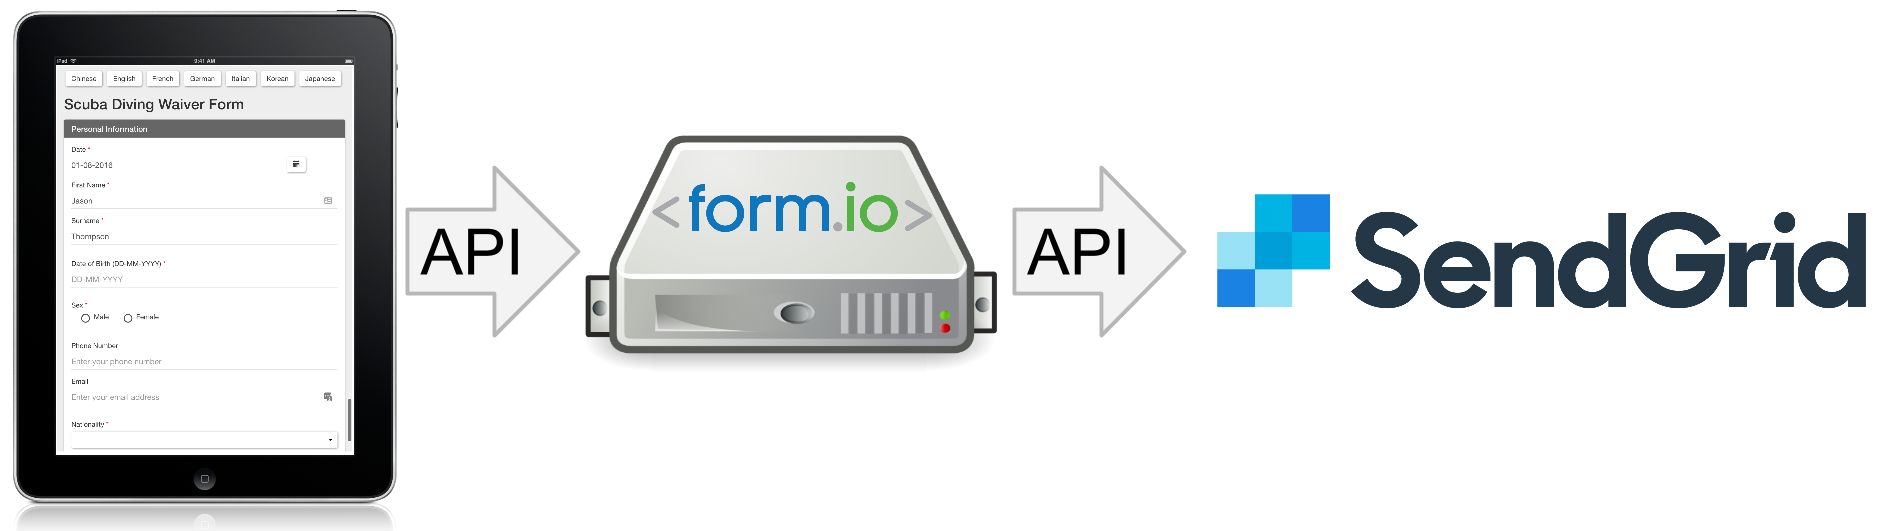 Form.io SendGrid integration.